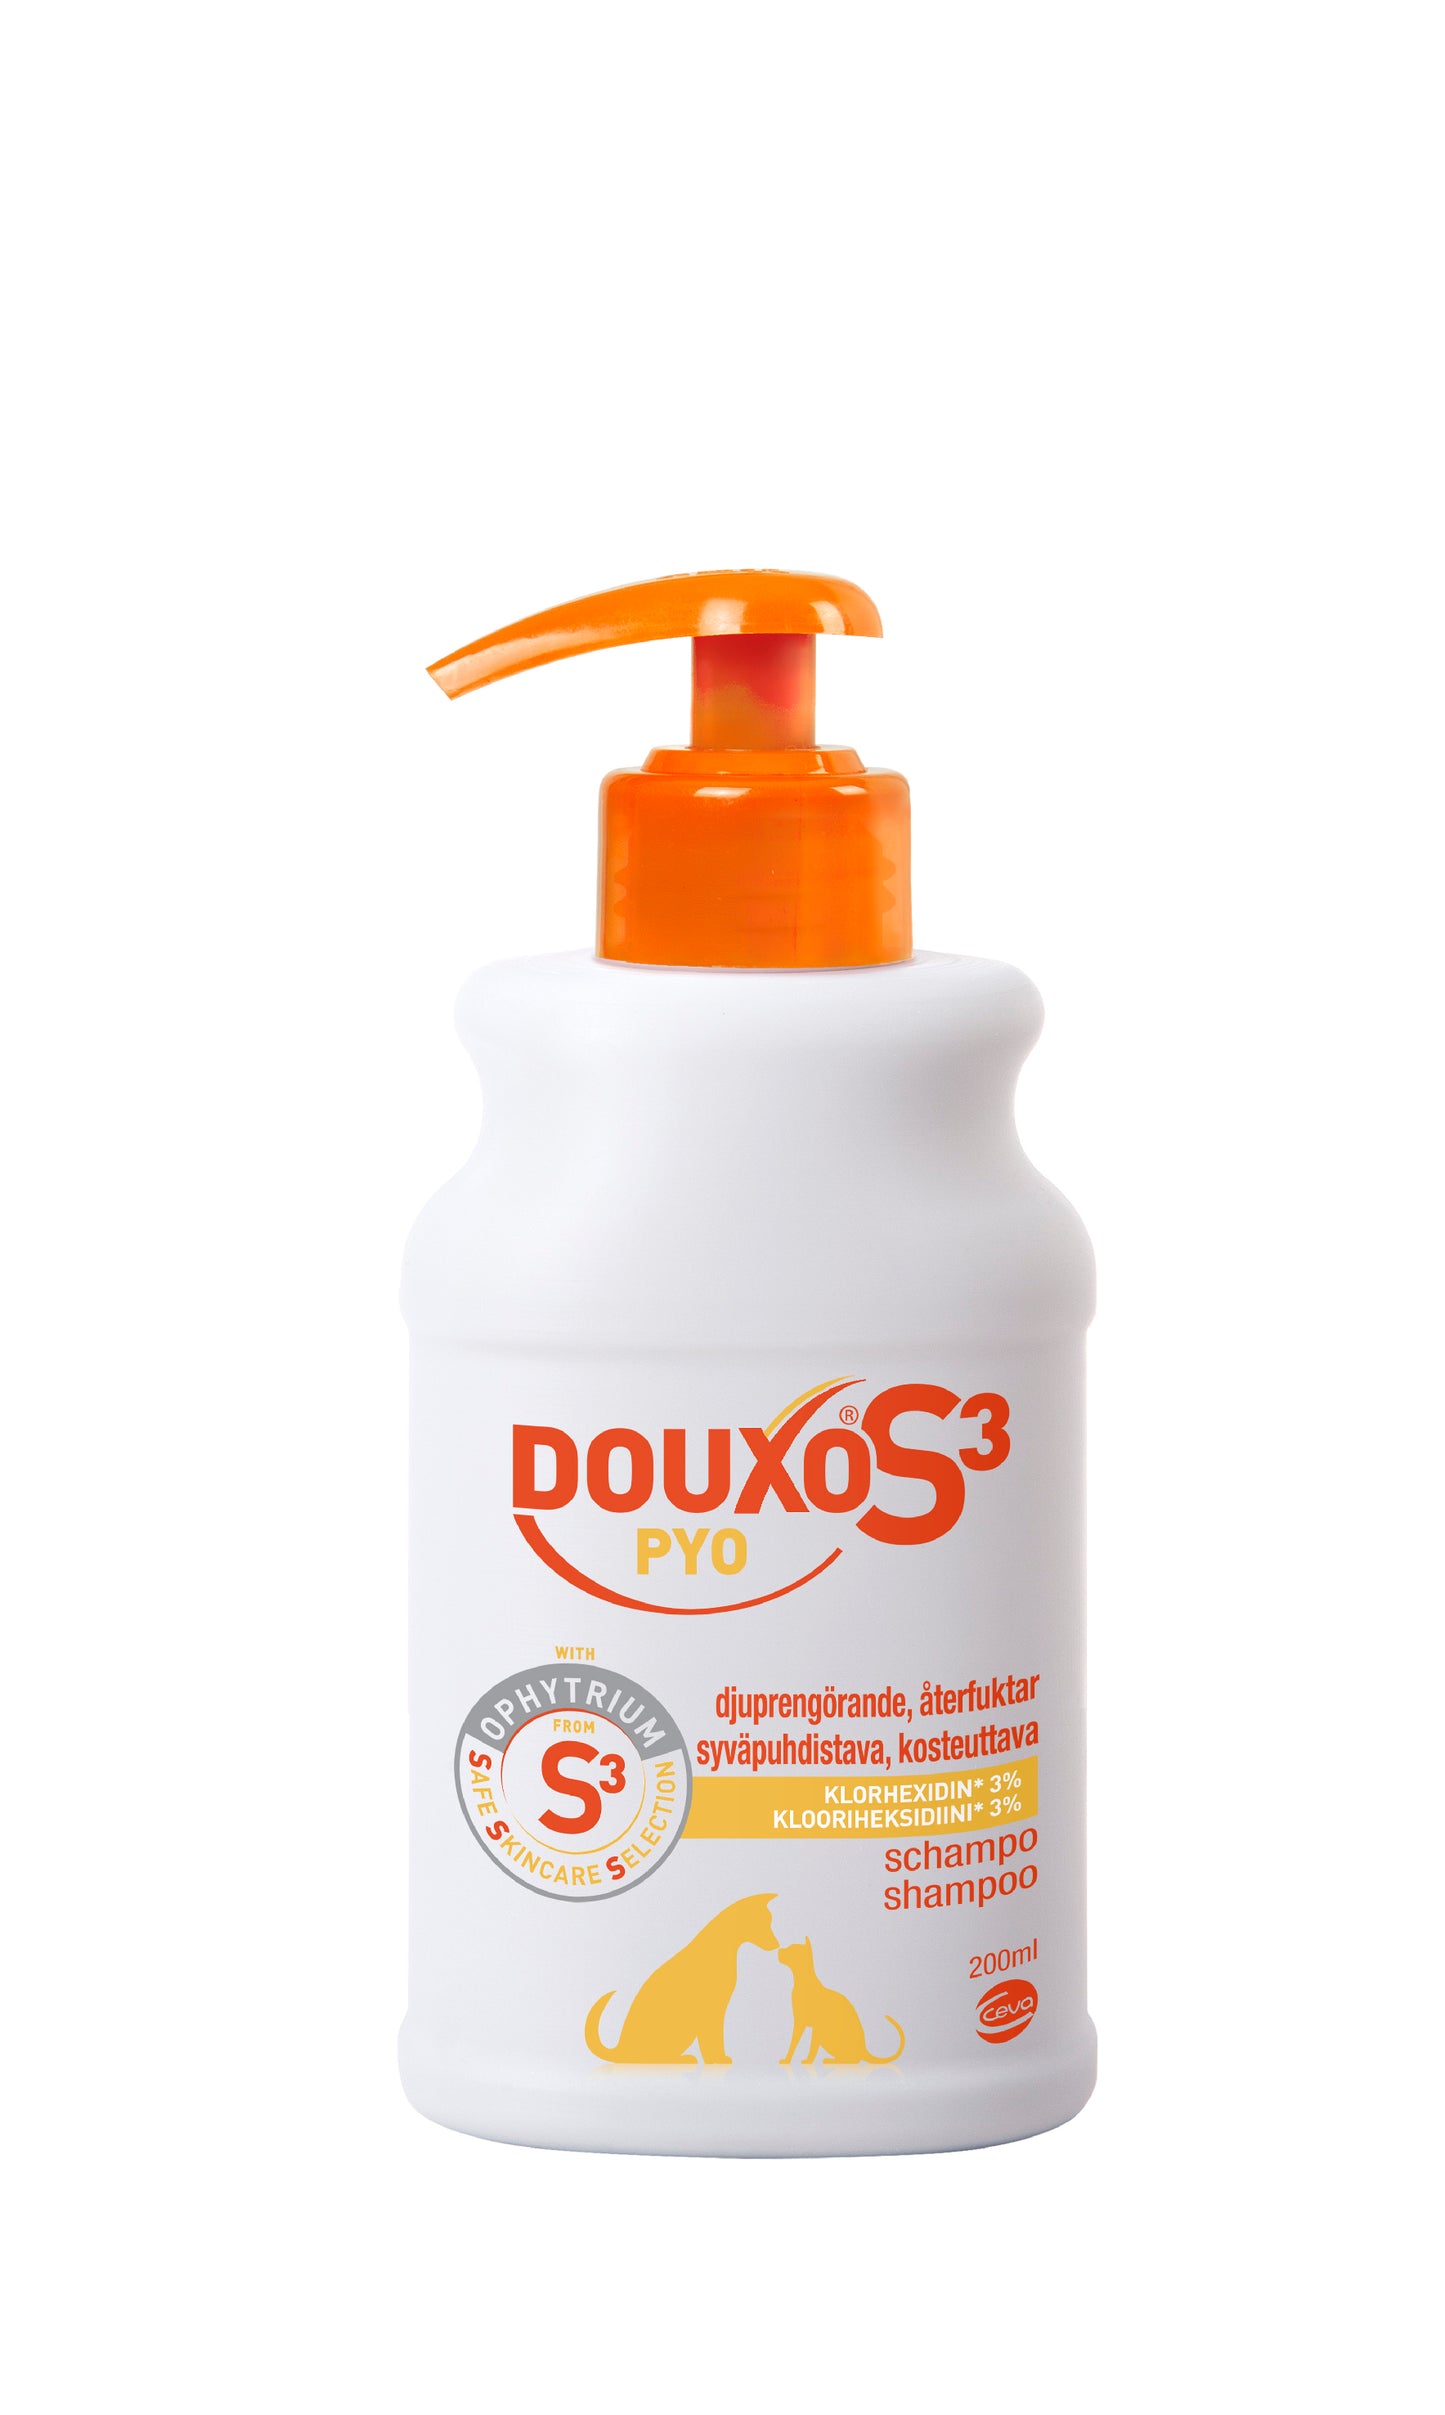 Douxo S3 Pyo Schampo med klorhexidin och ophytrium